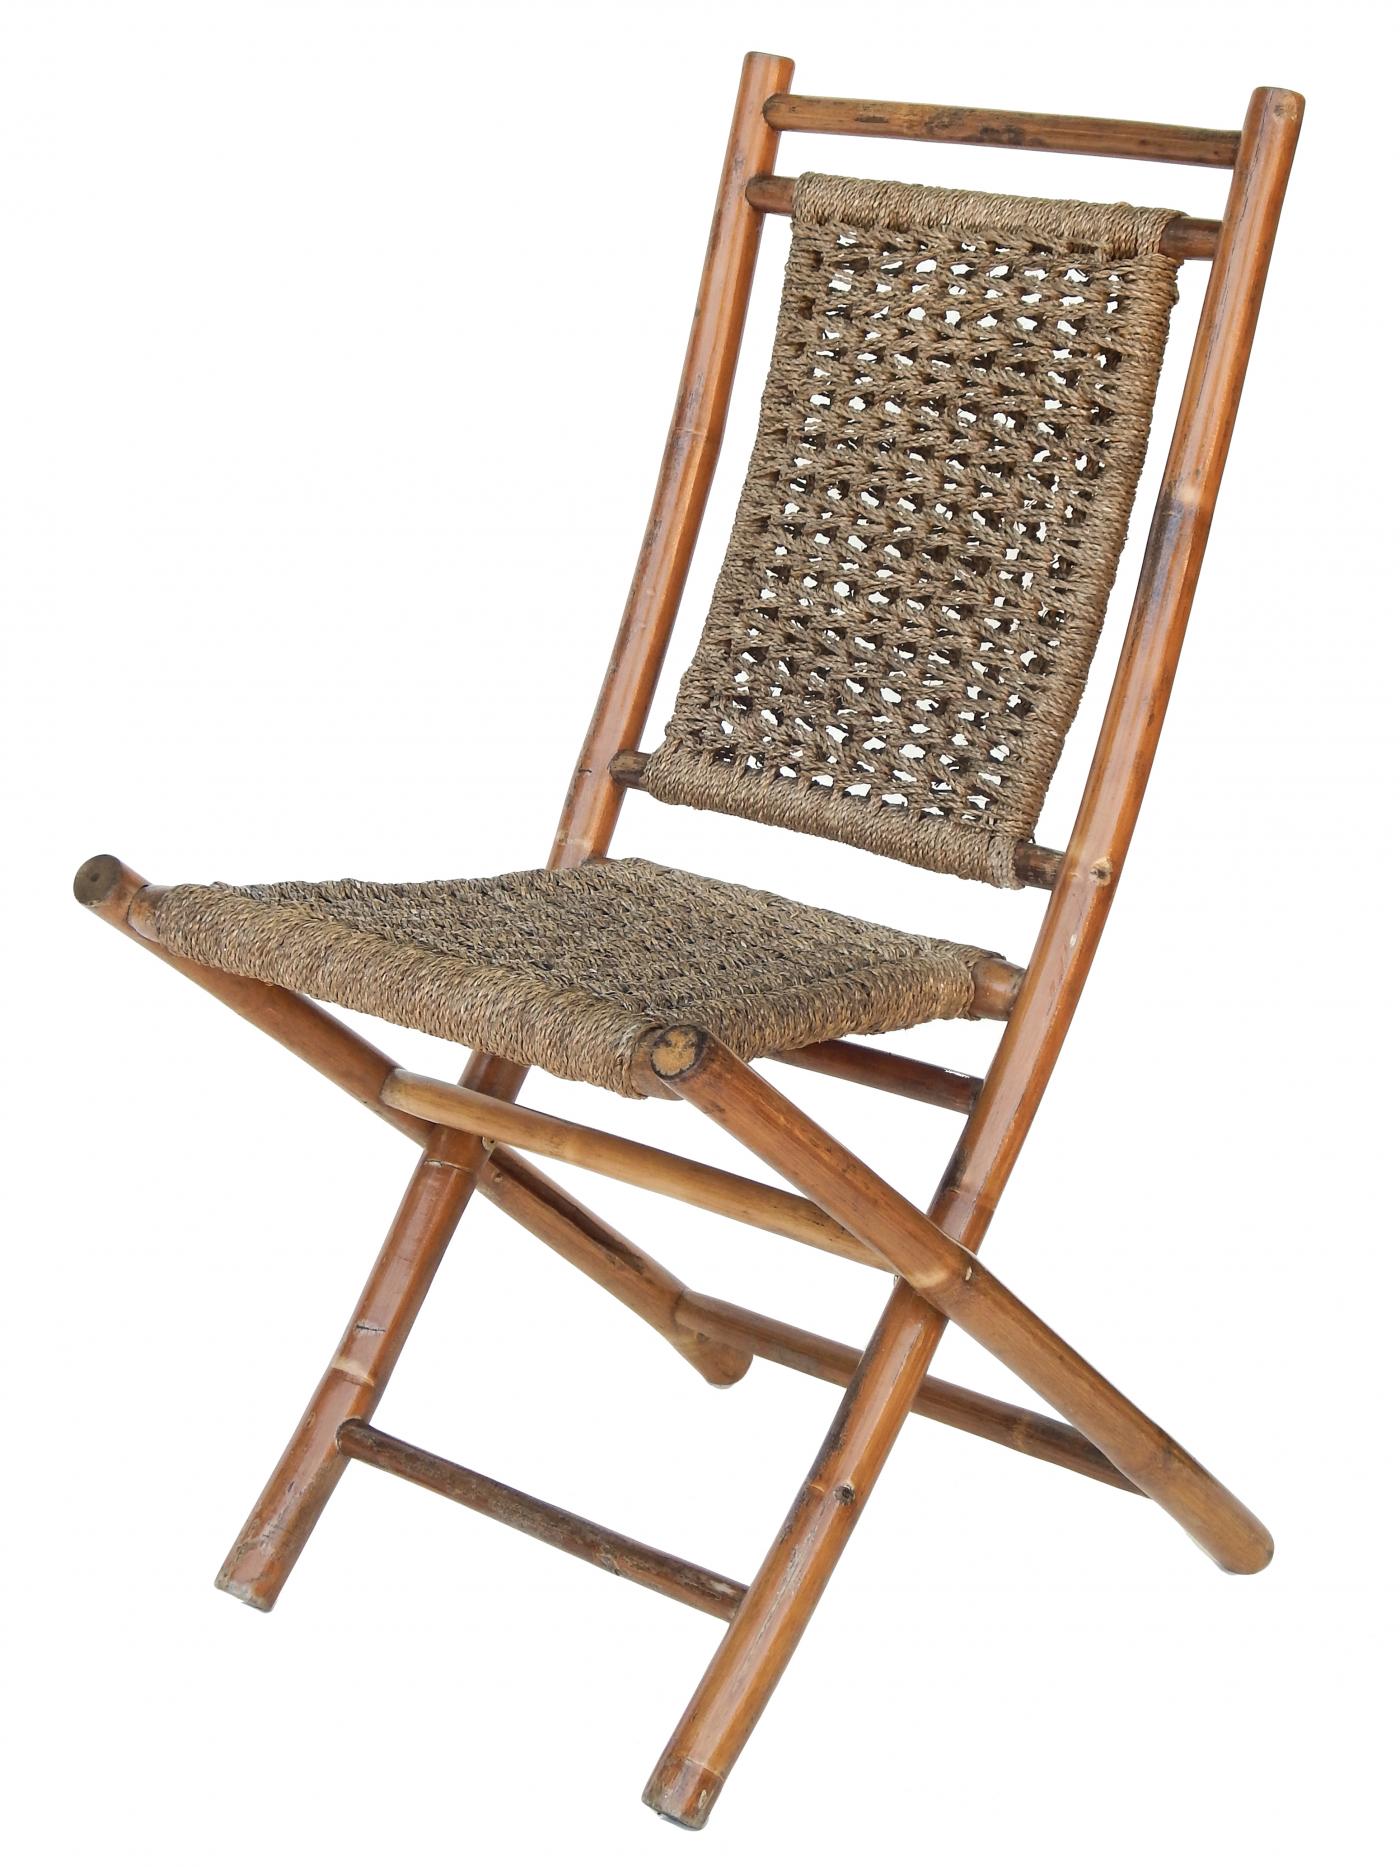 Folding Bamboo Chairs 341319 1229295 